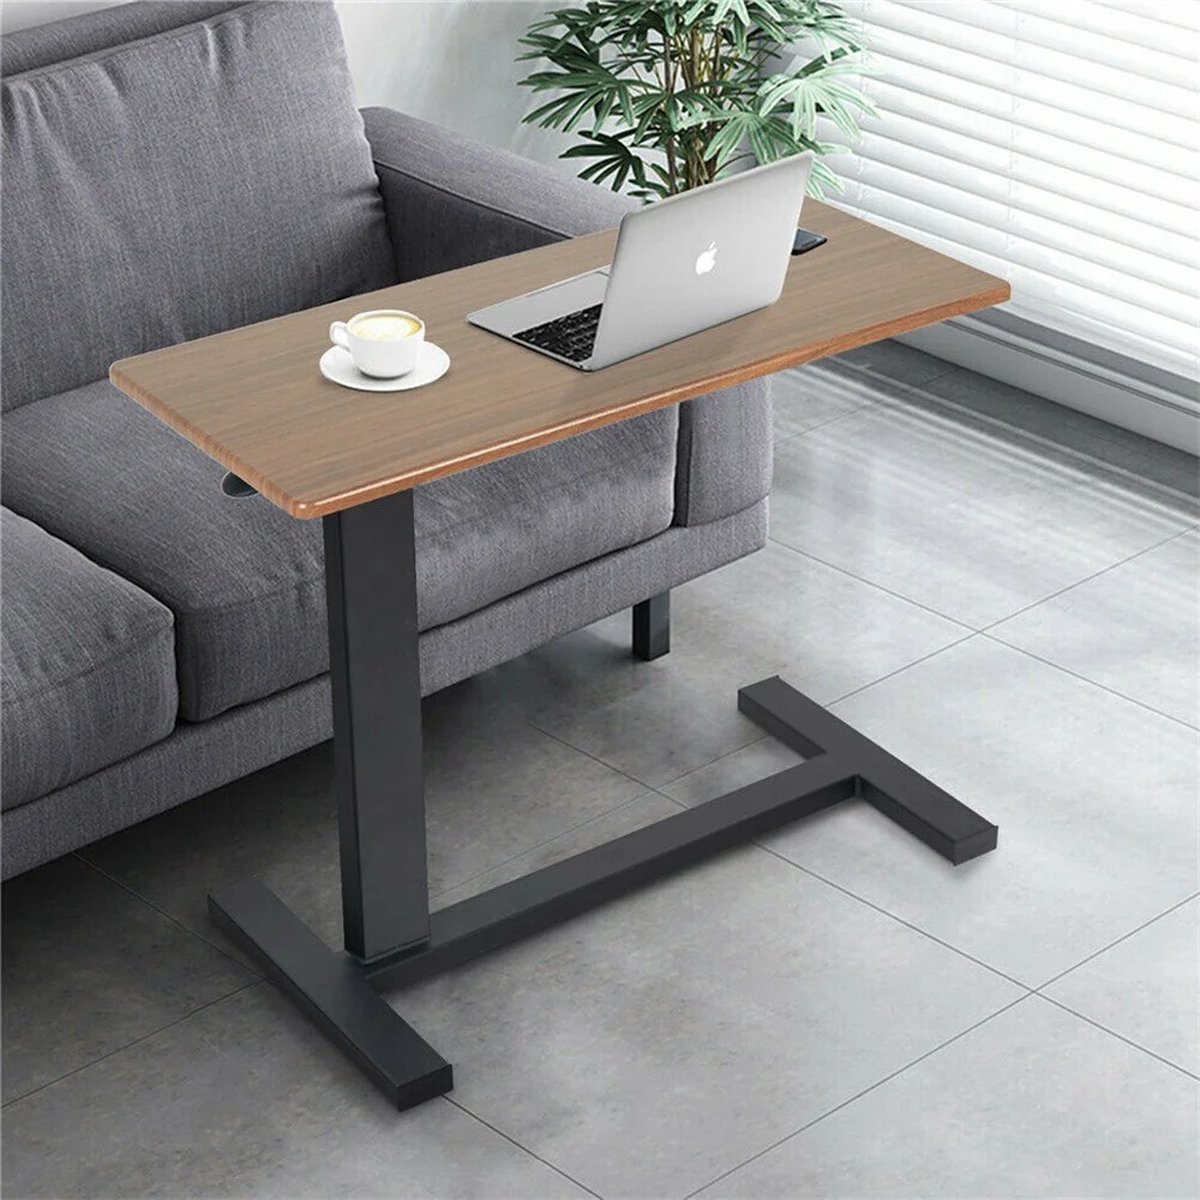 Verstelbare laptop bureau - Rollende tafel - Bank bureau - bed bureau - verrijdbaar - Bruin - 80x89.5x40 cm